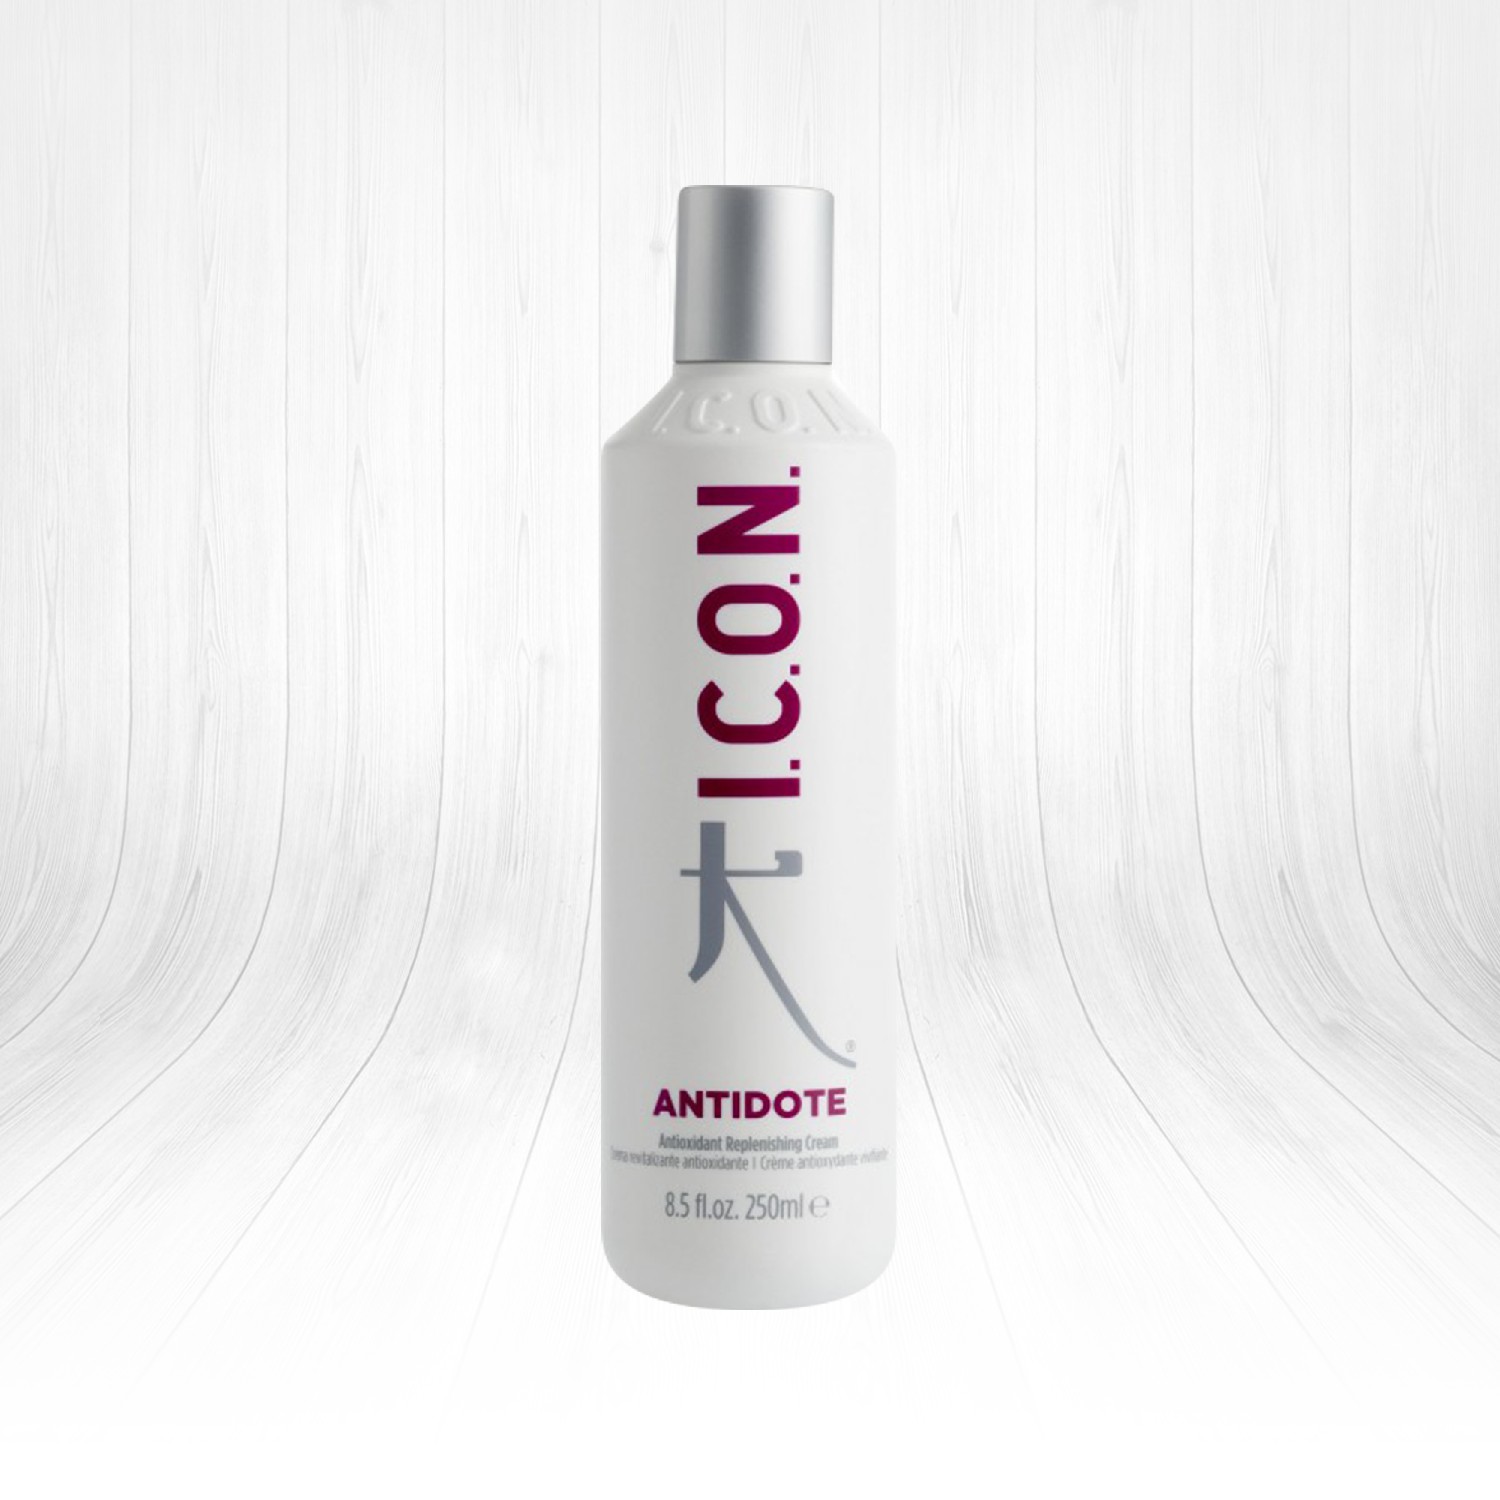 ICON Antidote Antioxidant Replenishing Cream Vitamin Dolgulu leyici Saç Kremi